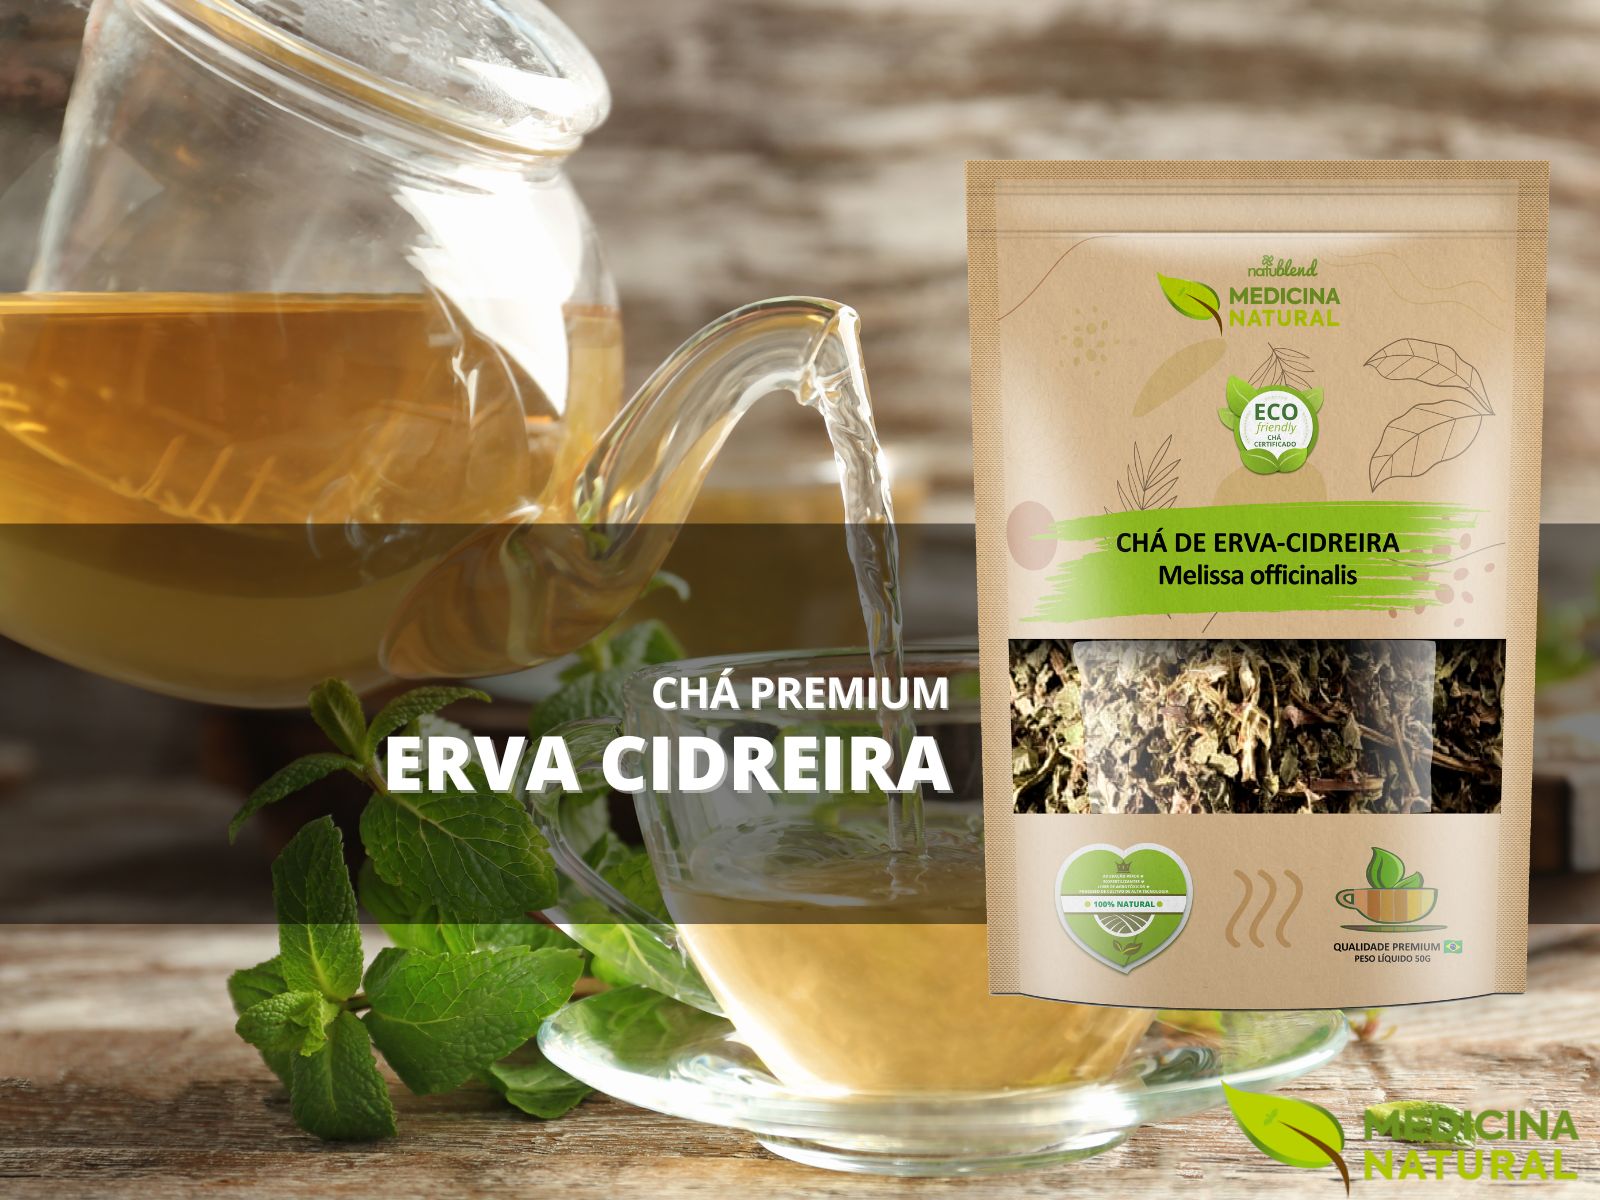 Chá de Erva Cidreira - Melissa officinalis - Medicina Natural